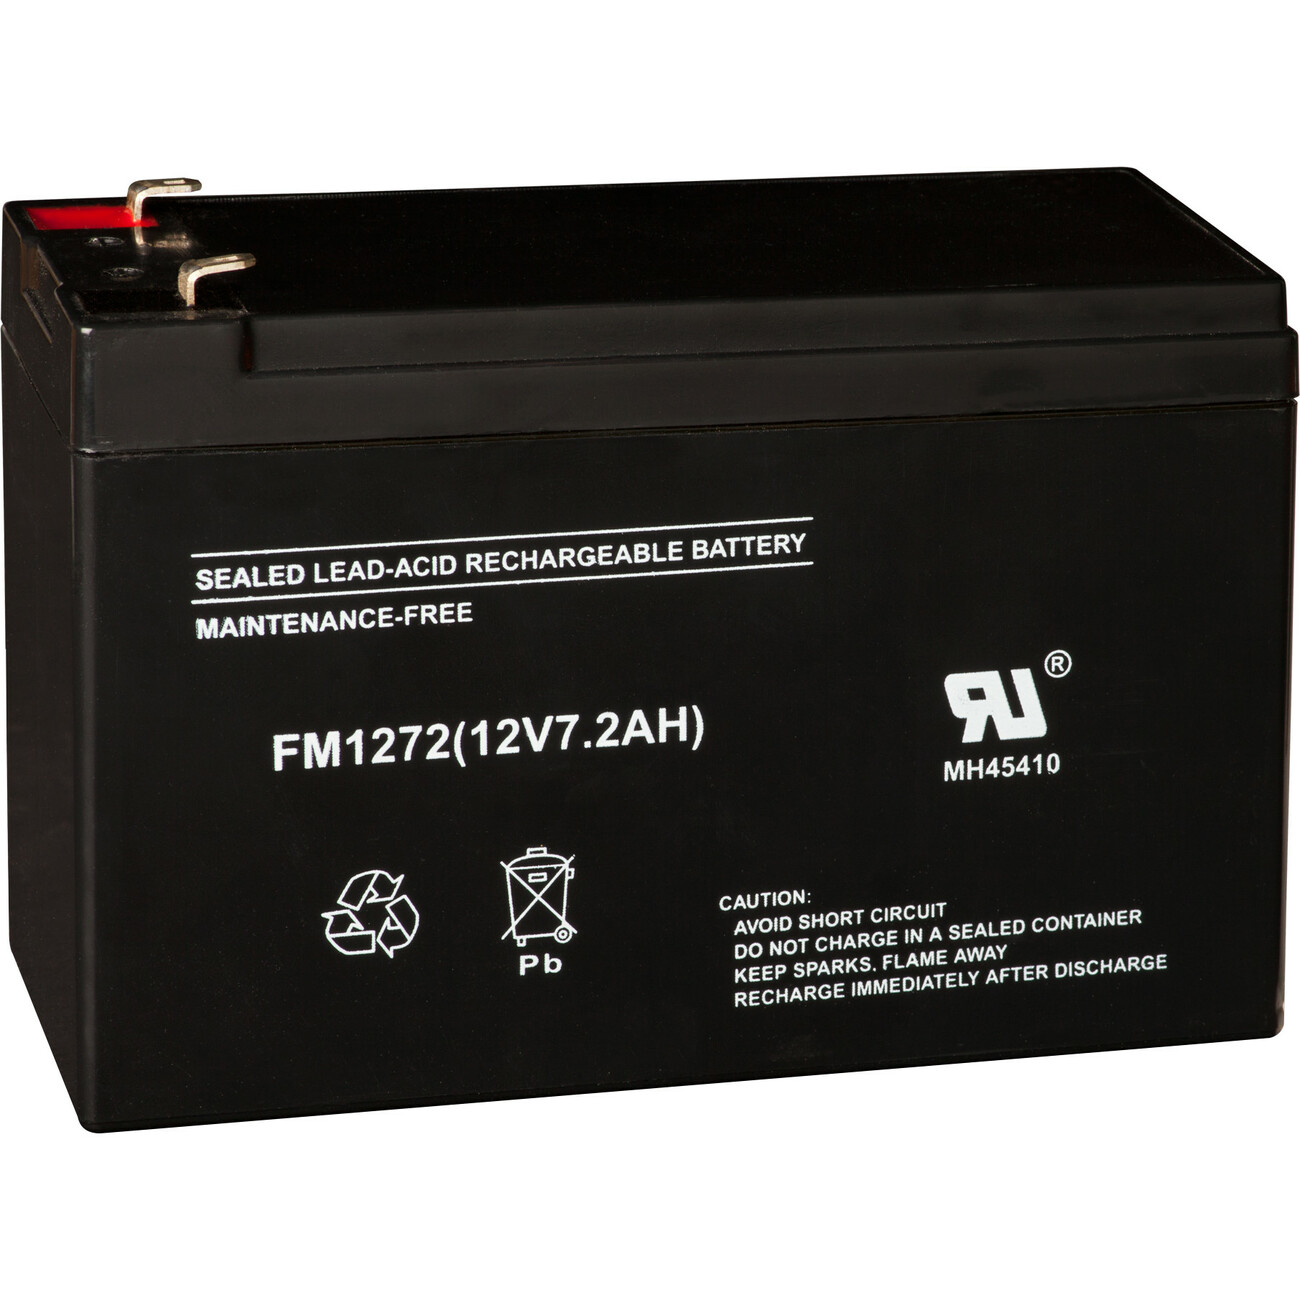 Marcum 12 Volt 7 Amp Replacement Battery